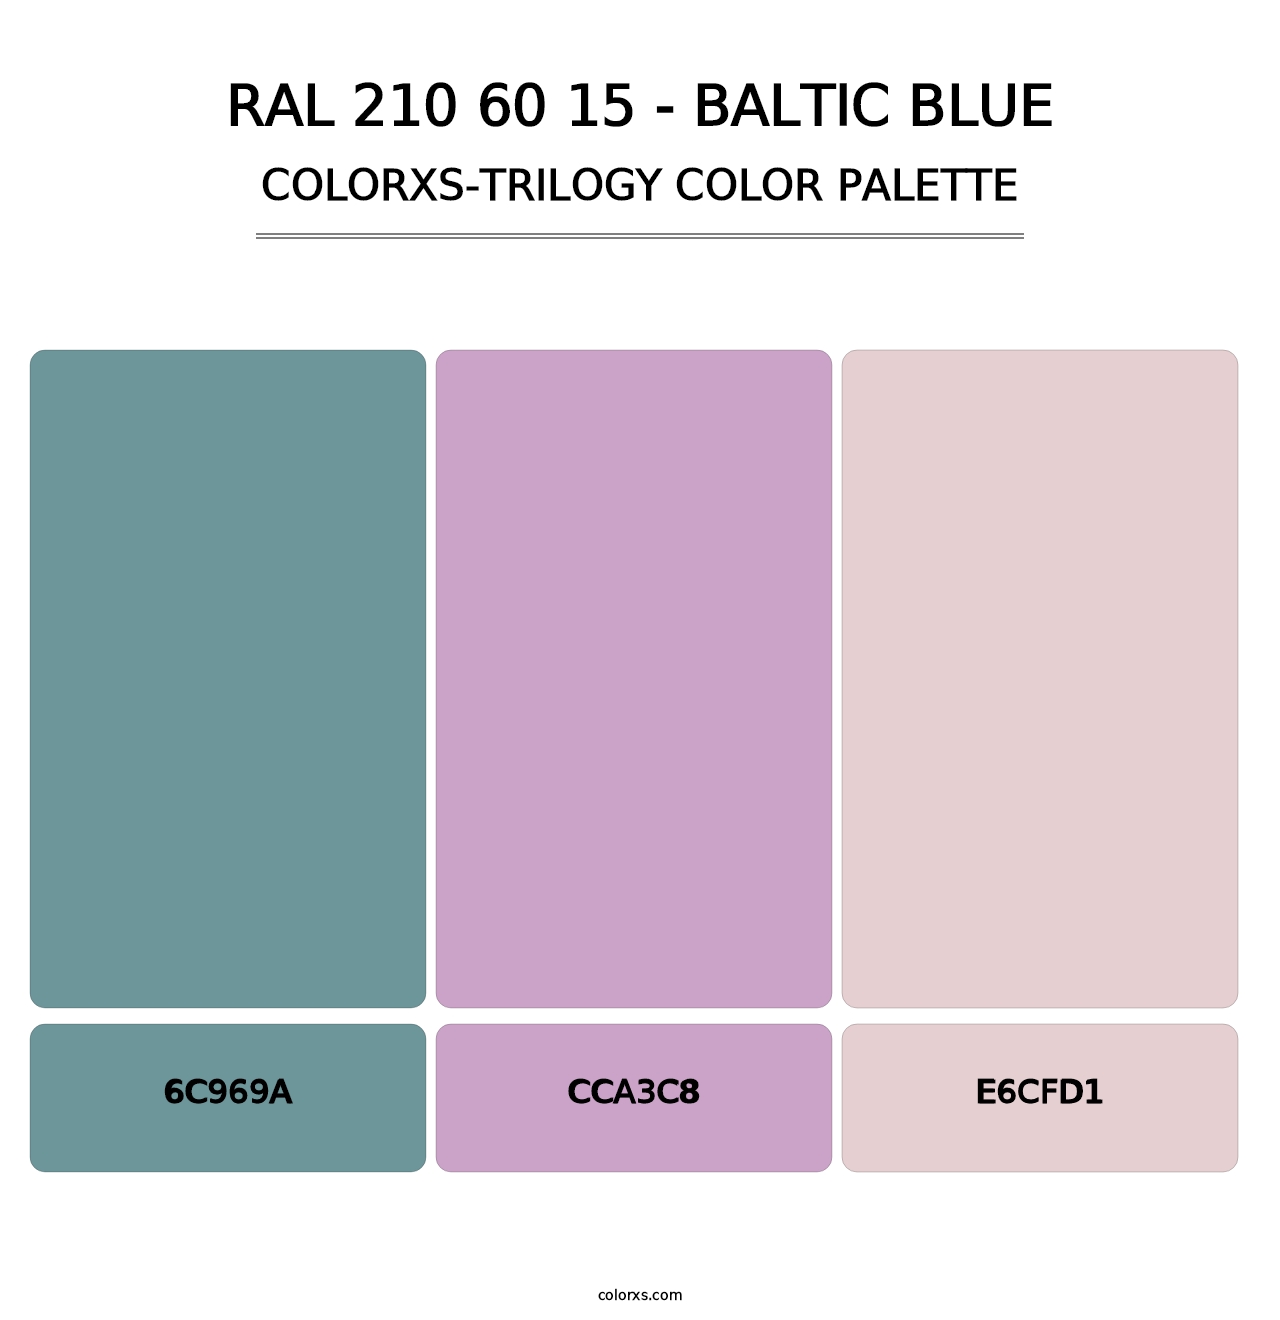 RAL 210 60 15 - Baltic Blue - Colorxs Trilogy Palette